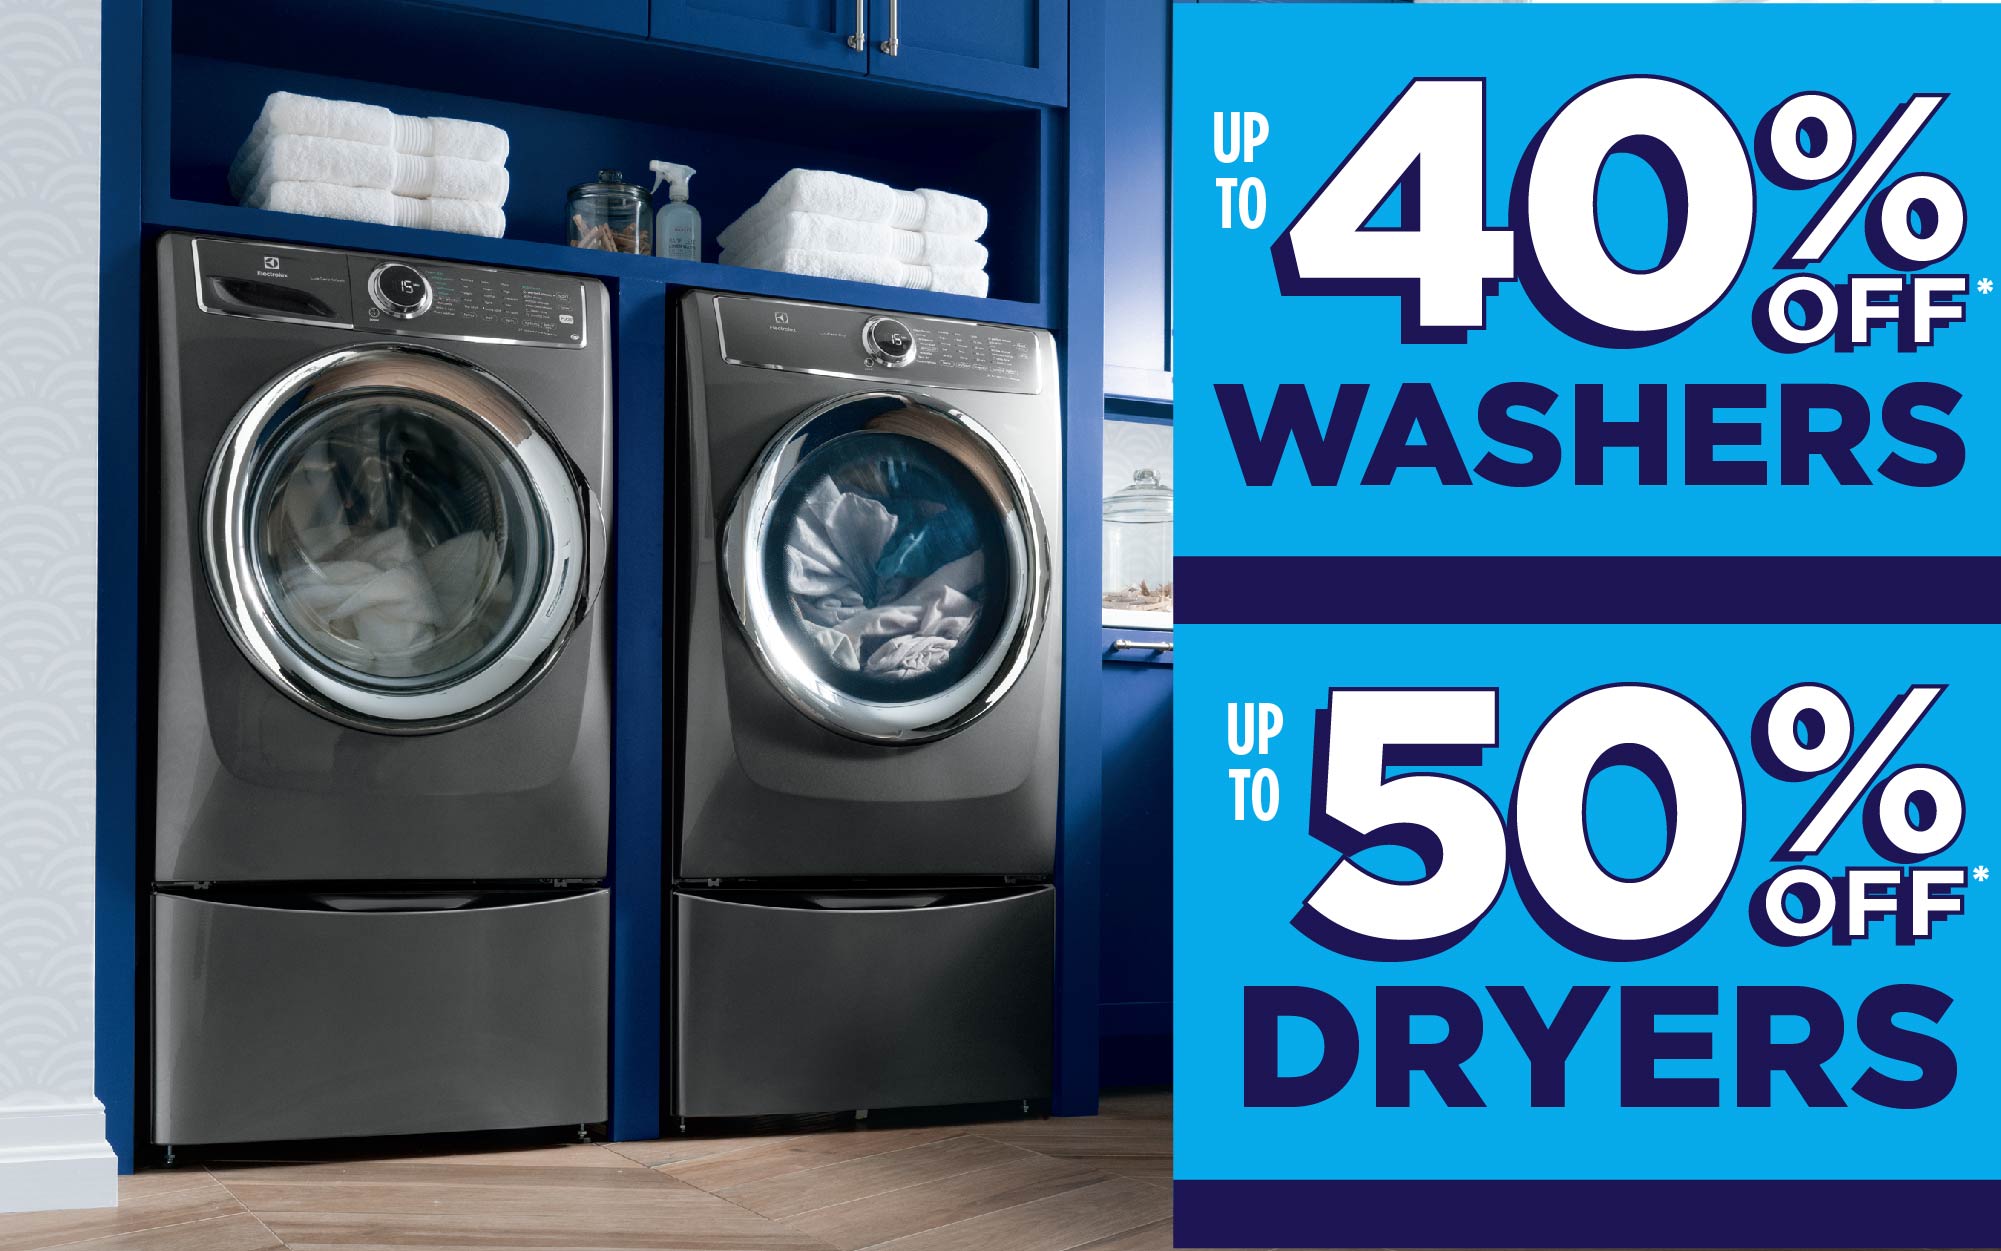 Save BIG on Washers & Dryers!